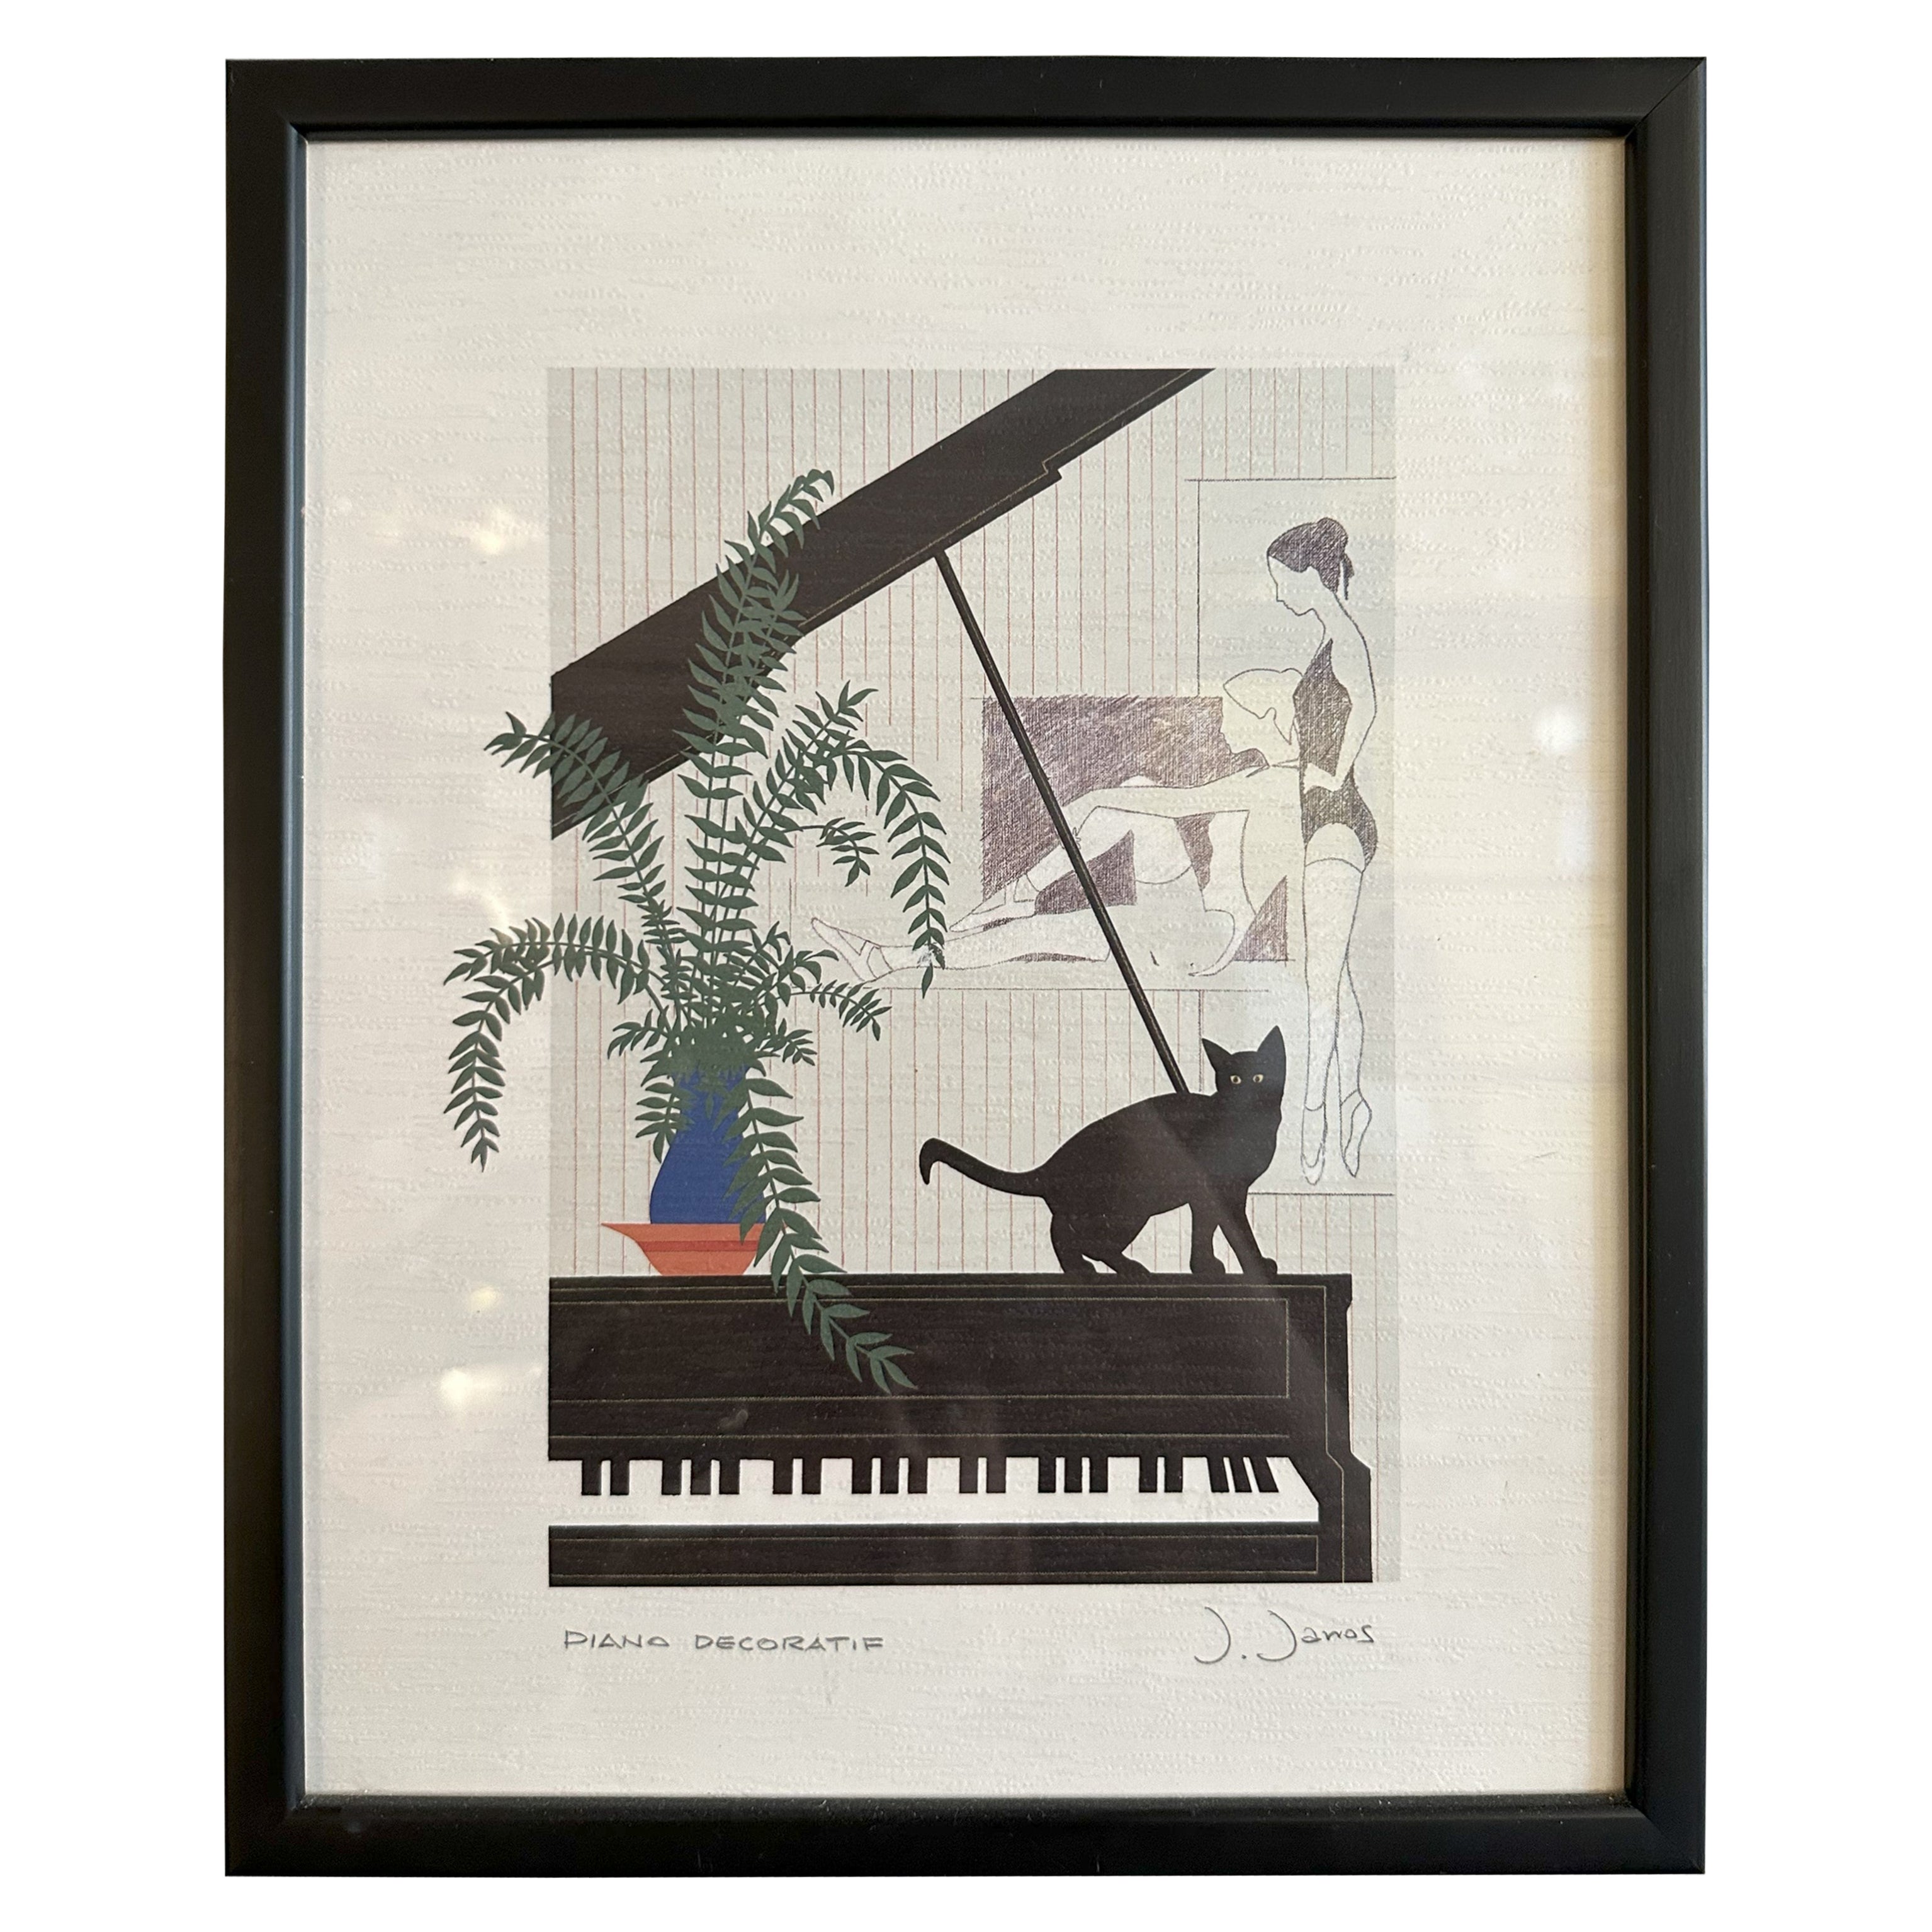 Mid-Century Modern 'PIANO DECORATIF' lithograph print by J. Janos 